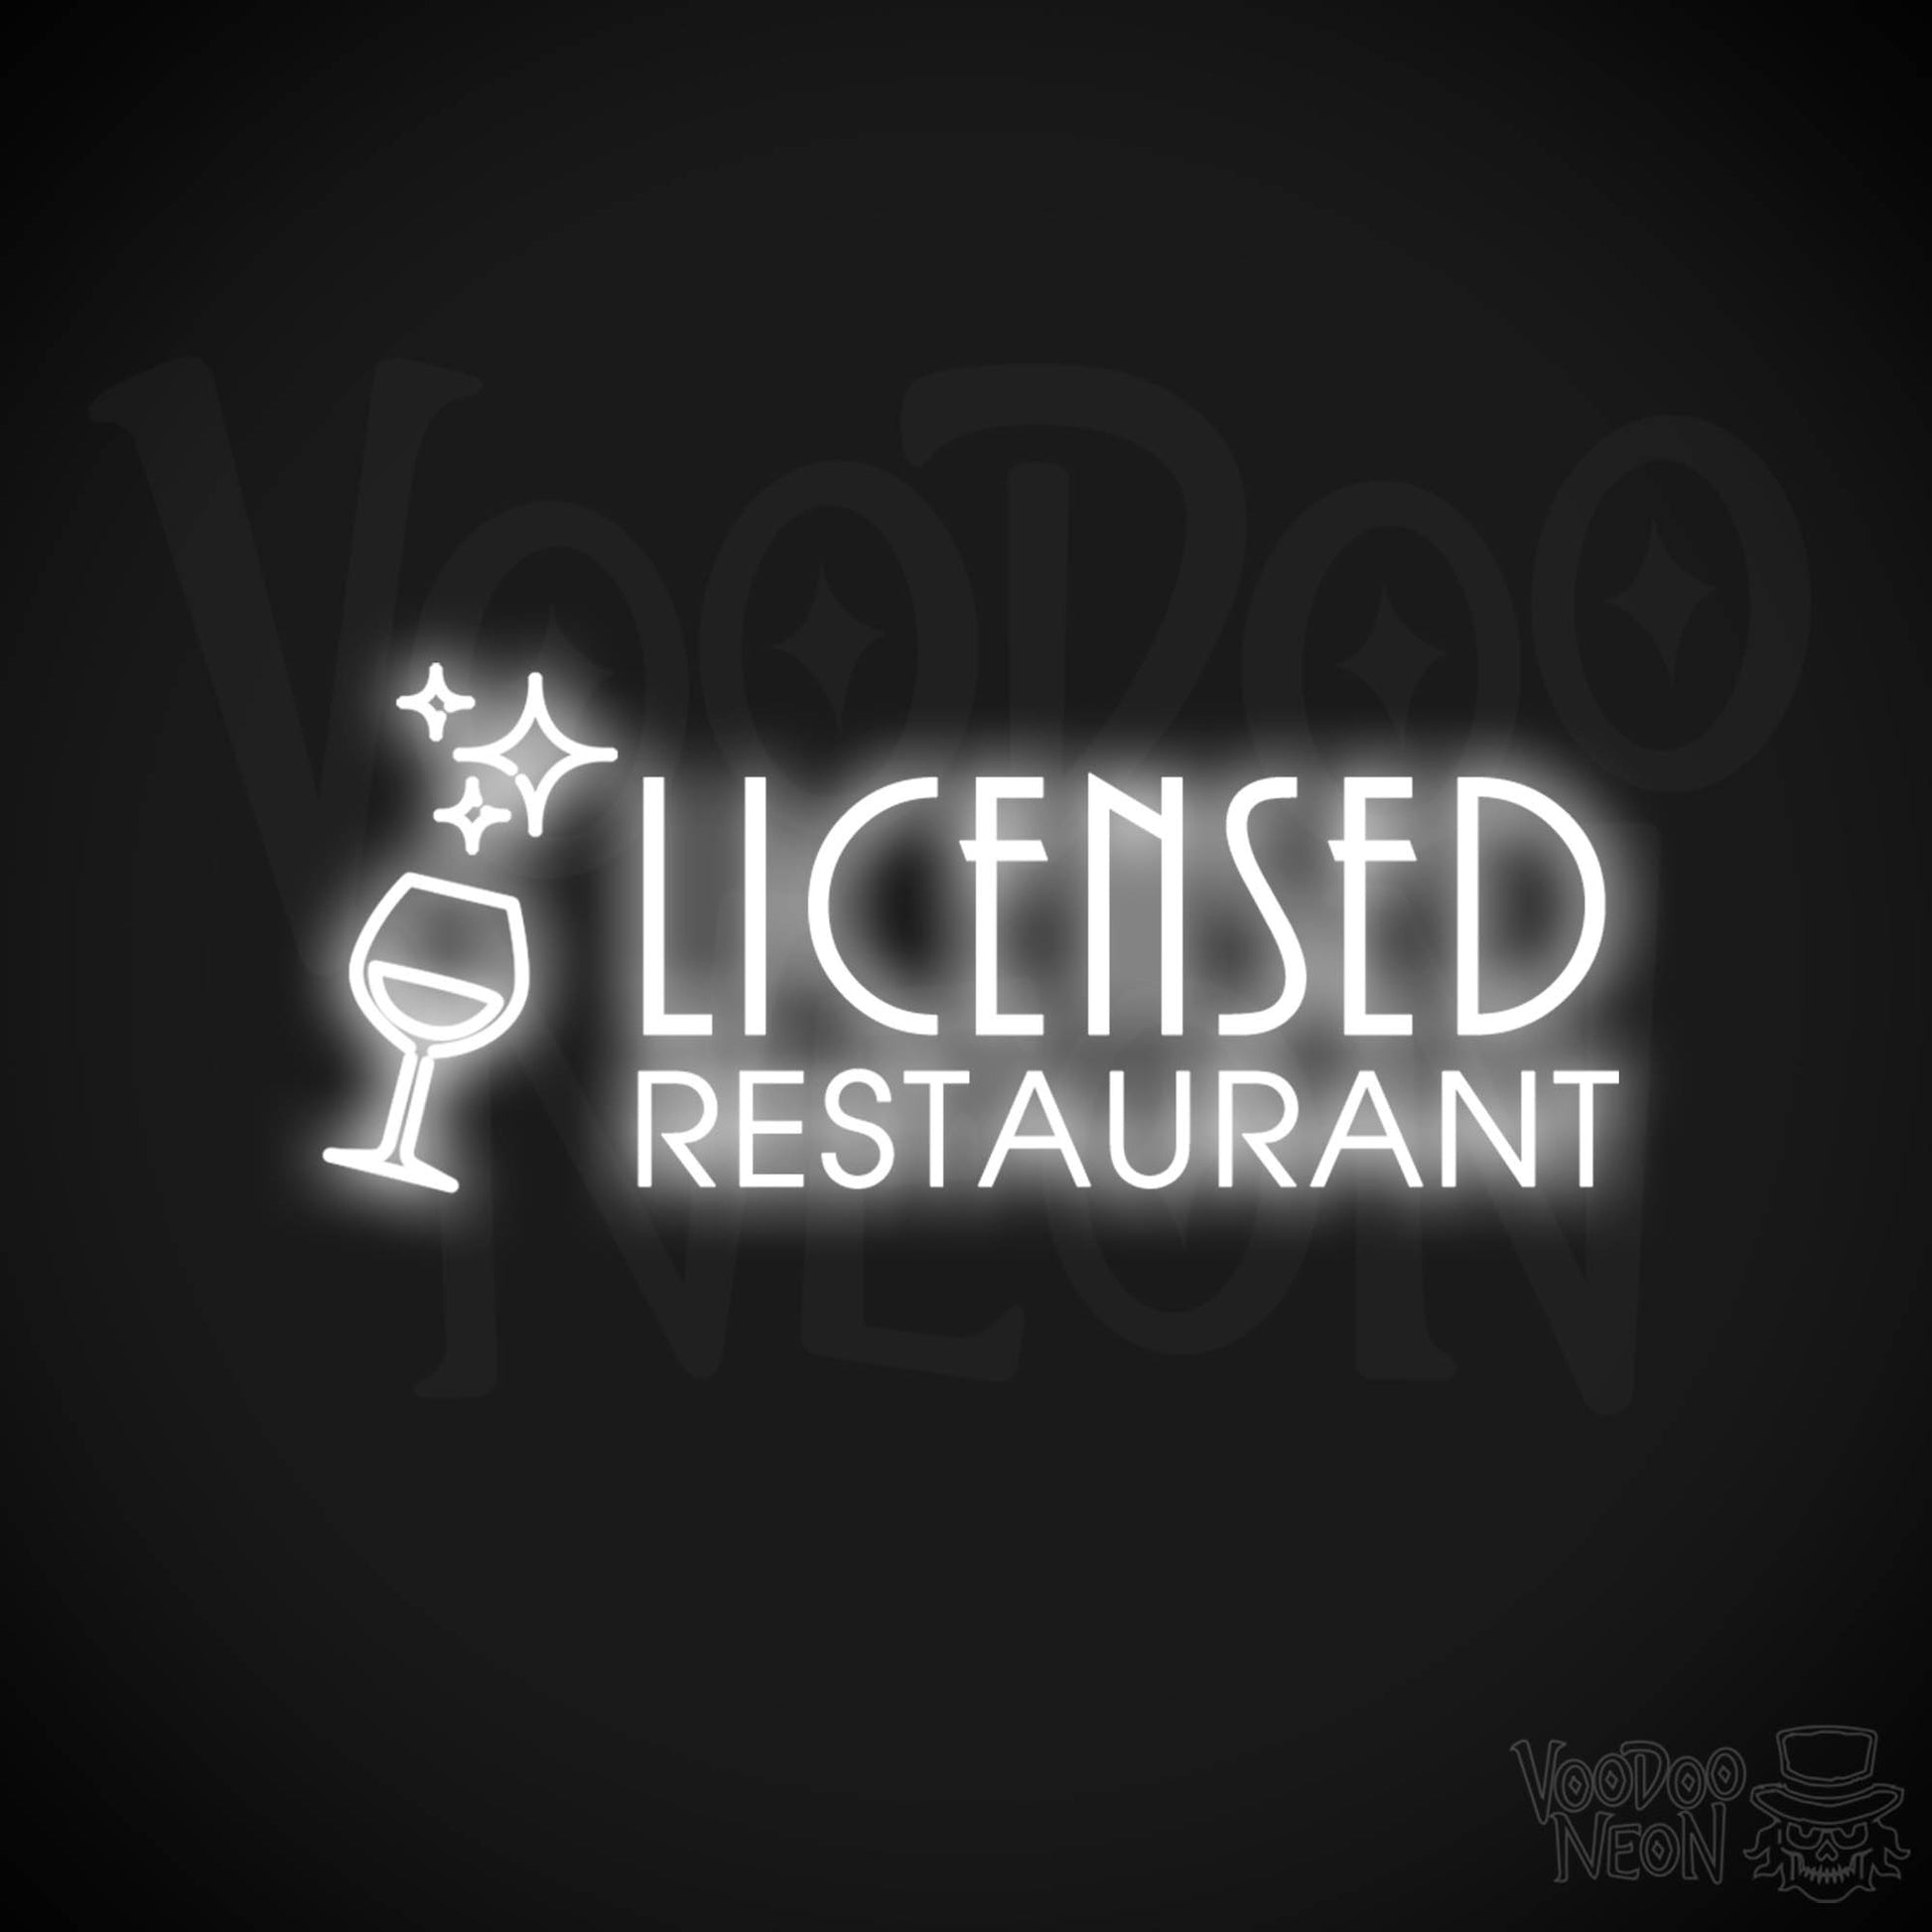 Licensed Restaurant Neon Sign - Licensed Restaurant Sign - Color White